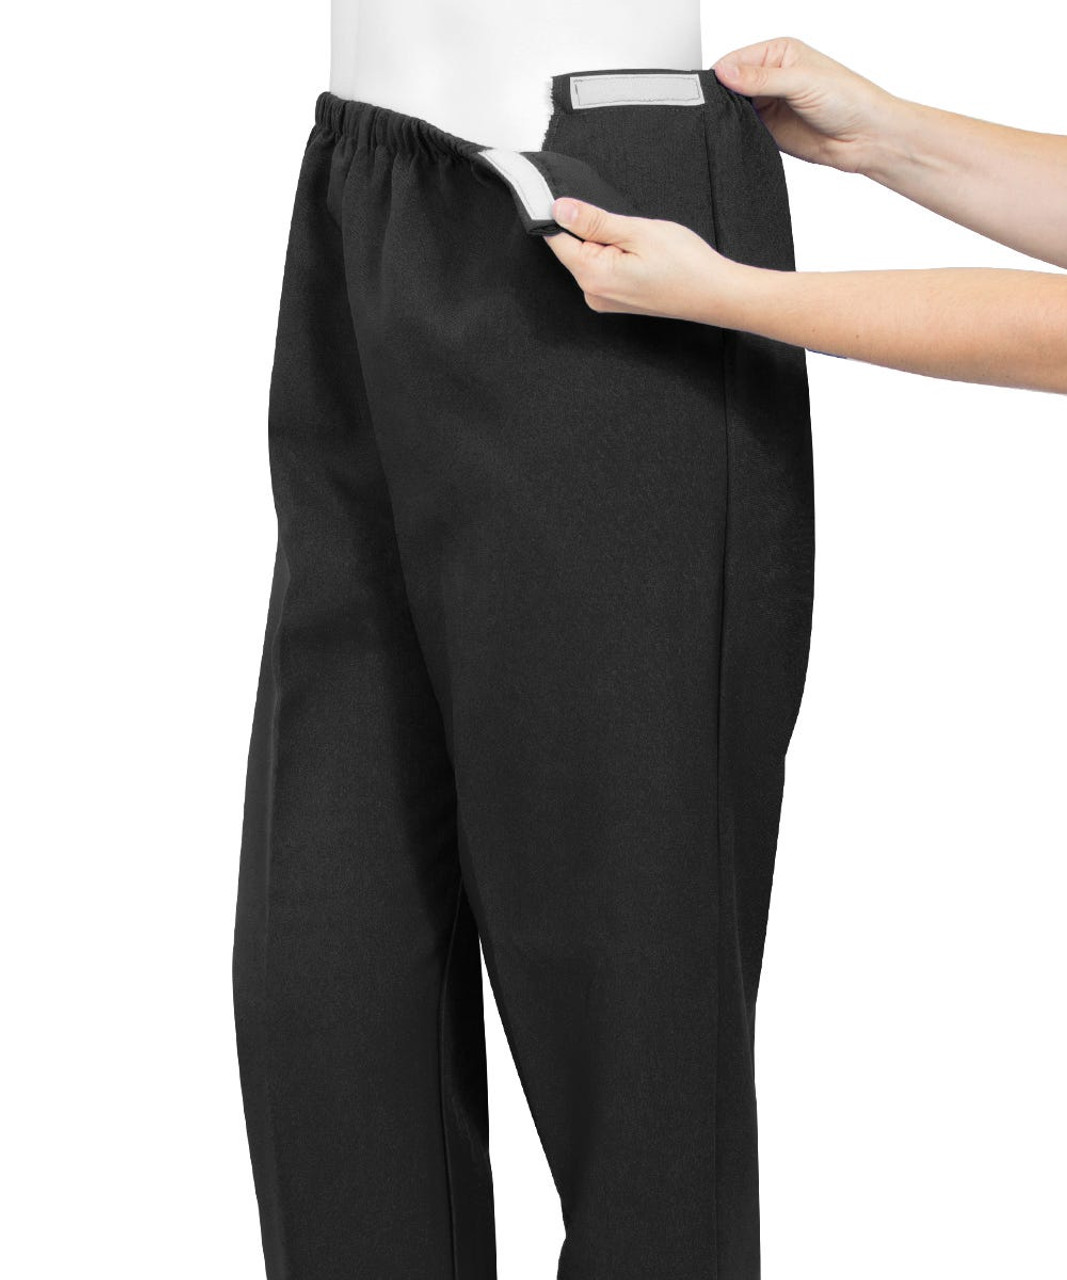 Silverts SV23120 Soft Knit Easy Access Pants for Women Black, Size=2XL, SV23120-SV2-2XL